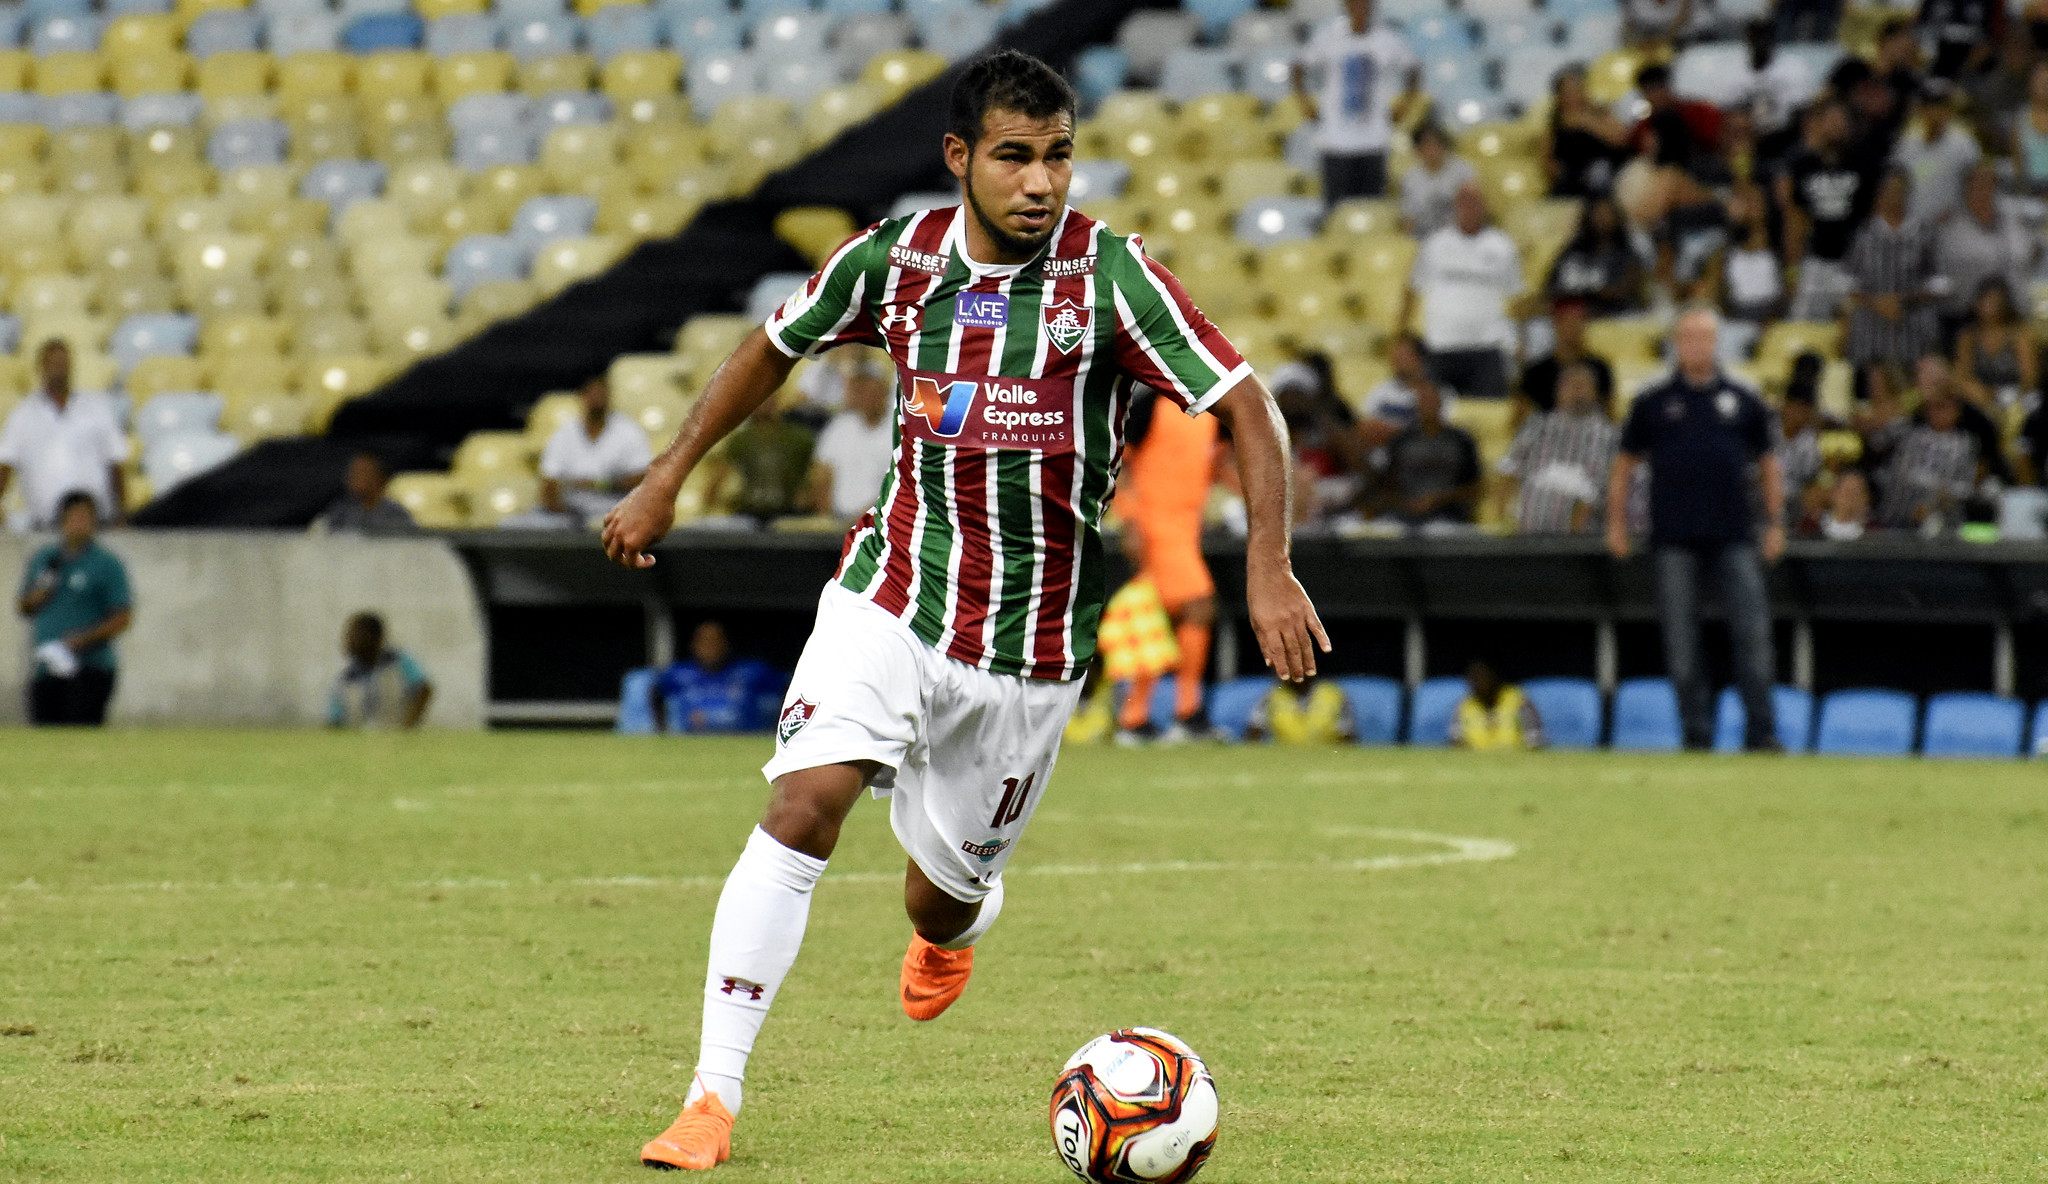 SORNOZA (Meia) - Contratado pelo Fluminense junto ao Independiente del Valle (EQU)